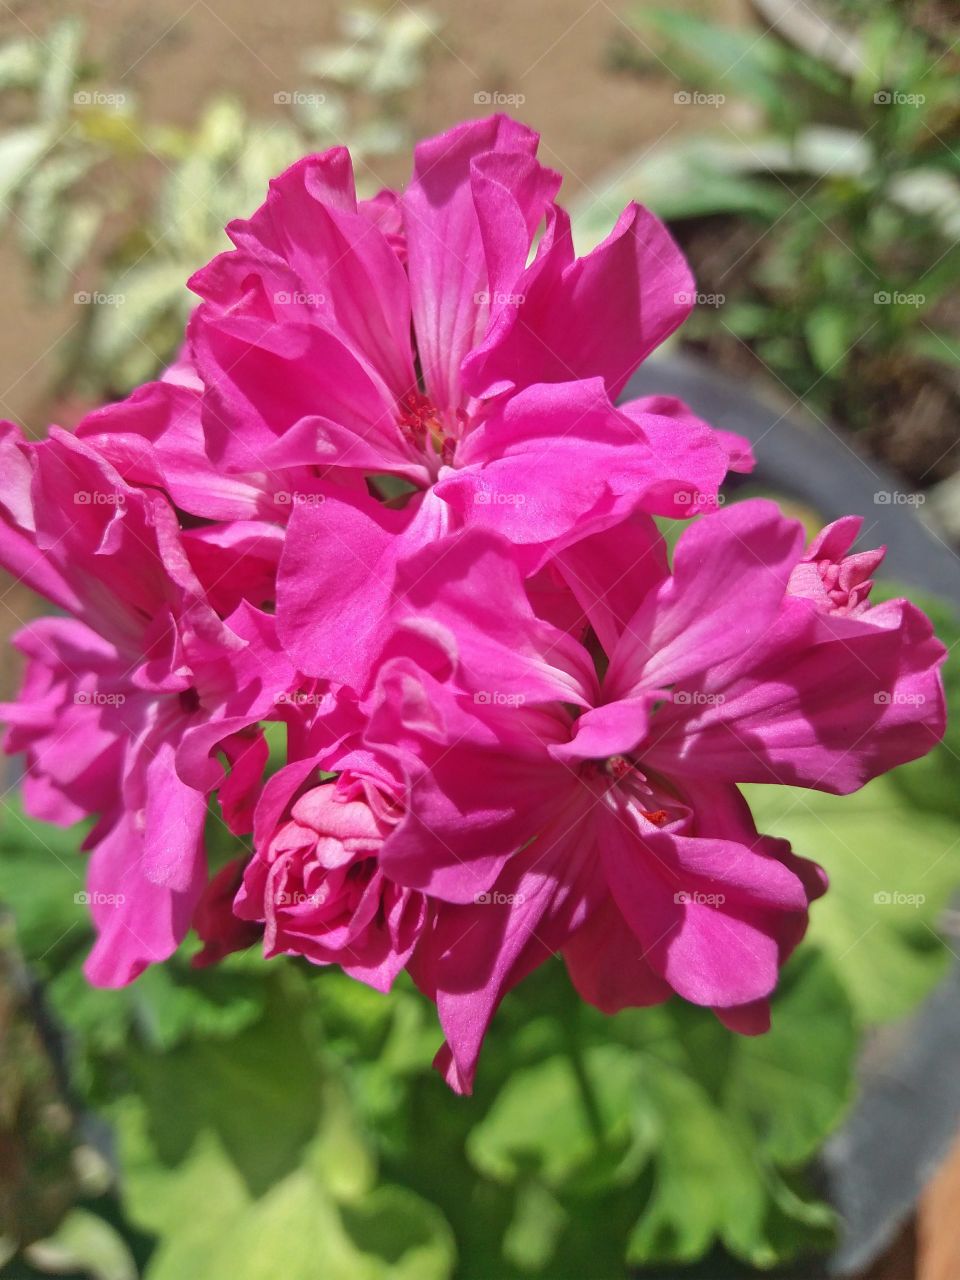 Hot Pink in flower